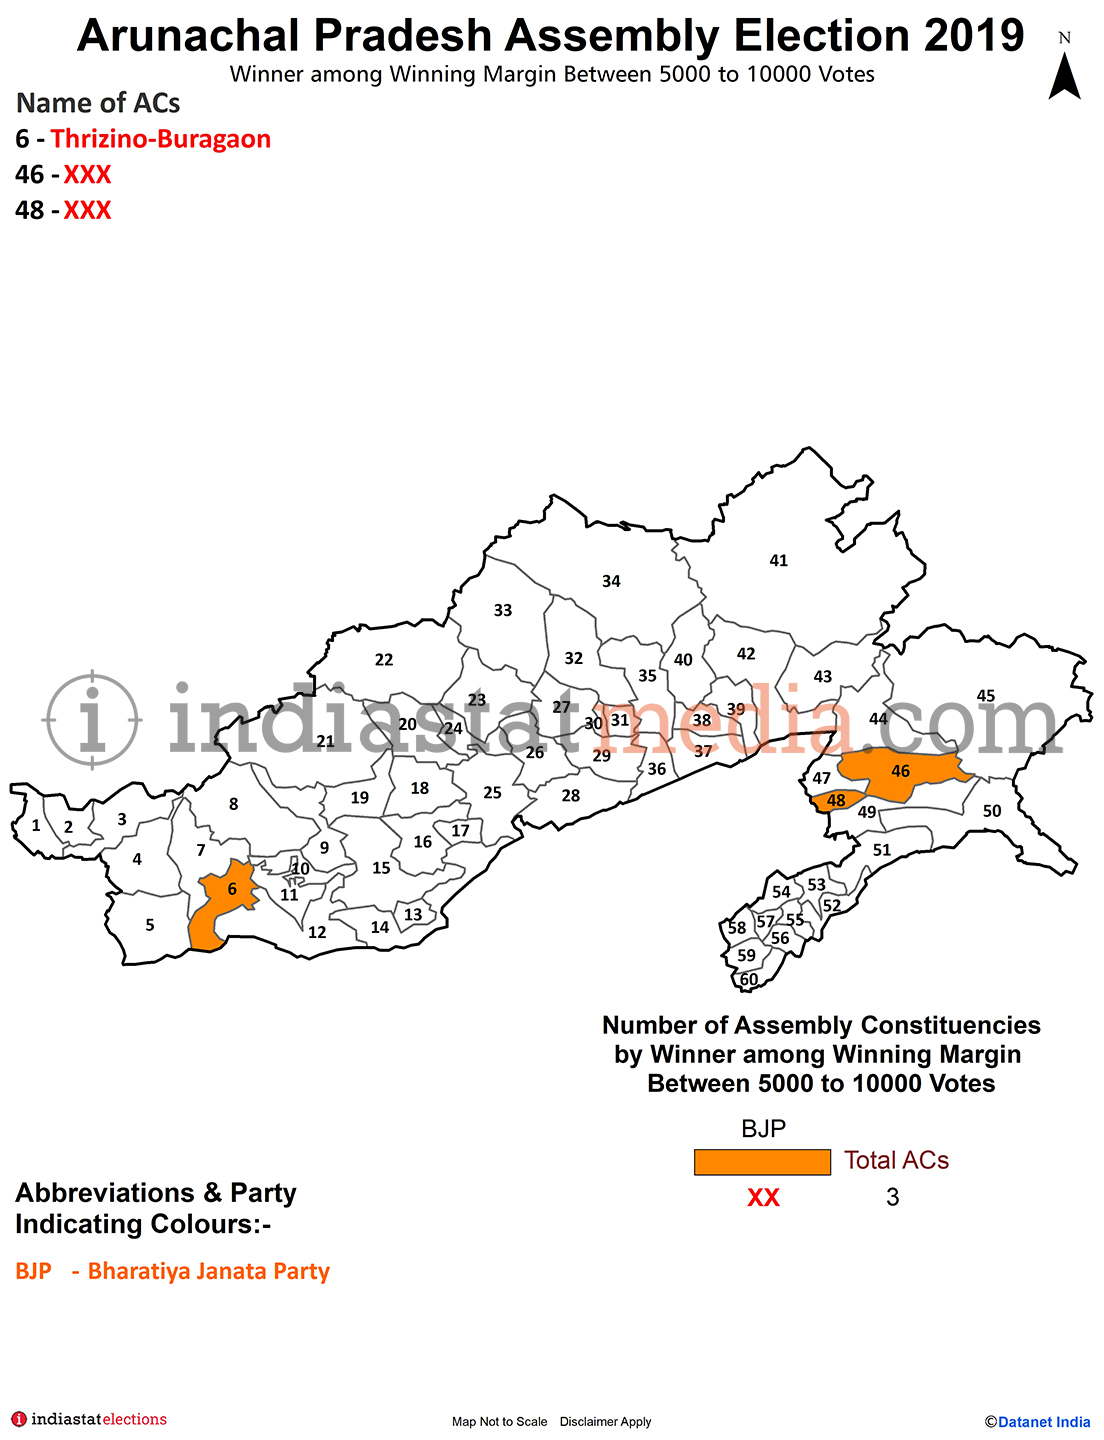 Winner among Winning Margin Between 5000 to 10000 Votes in Arunachal Pradesh (Assembly Election - 2019)